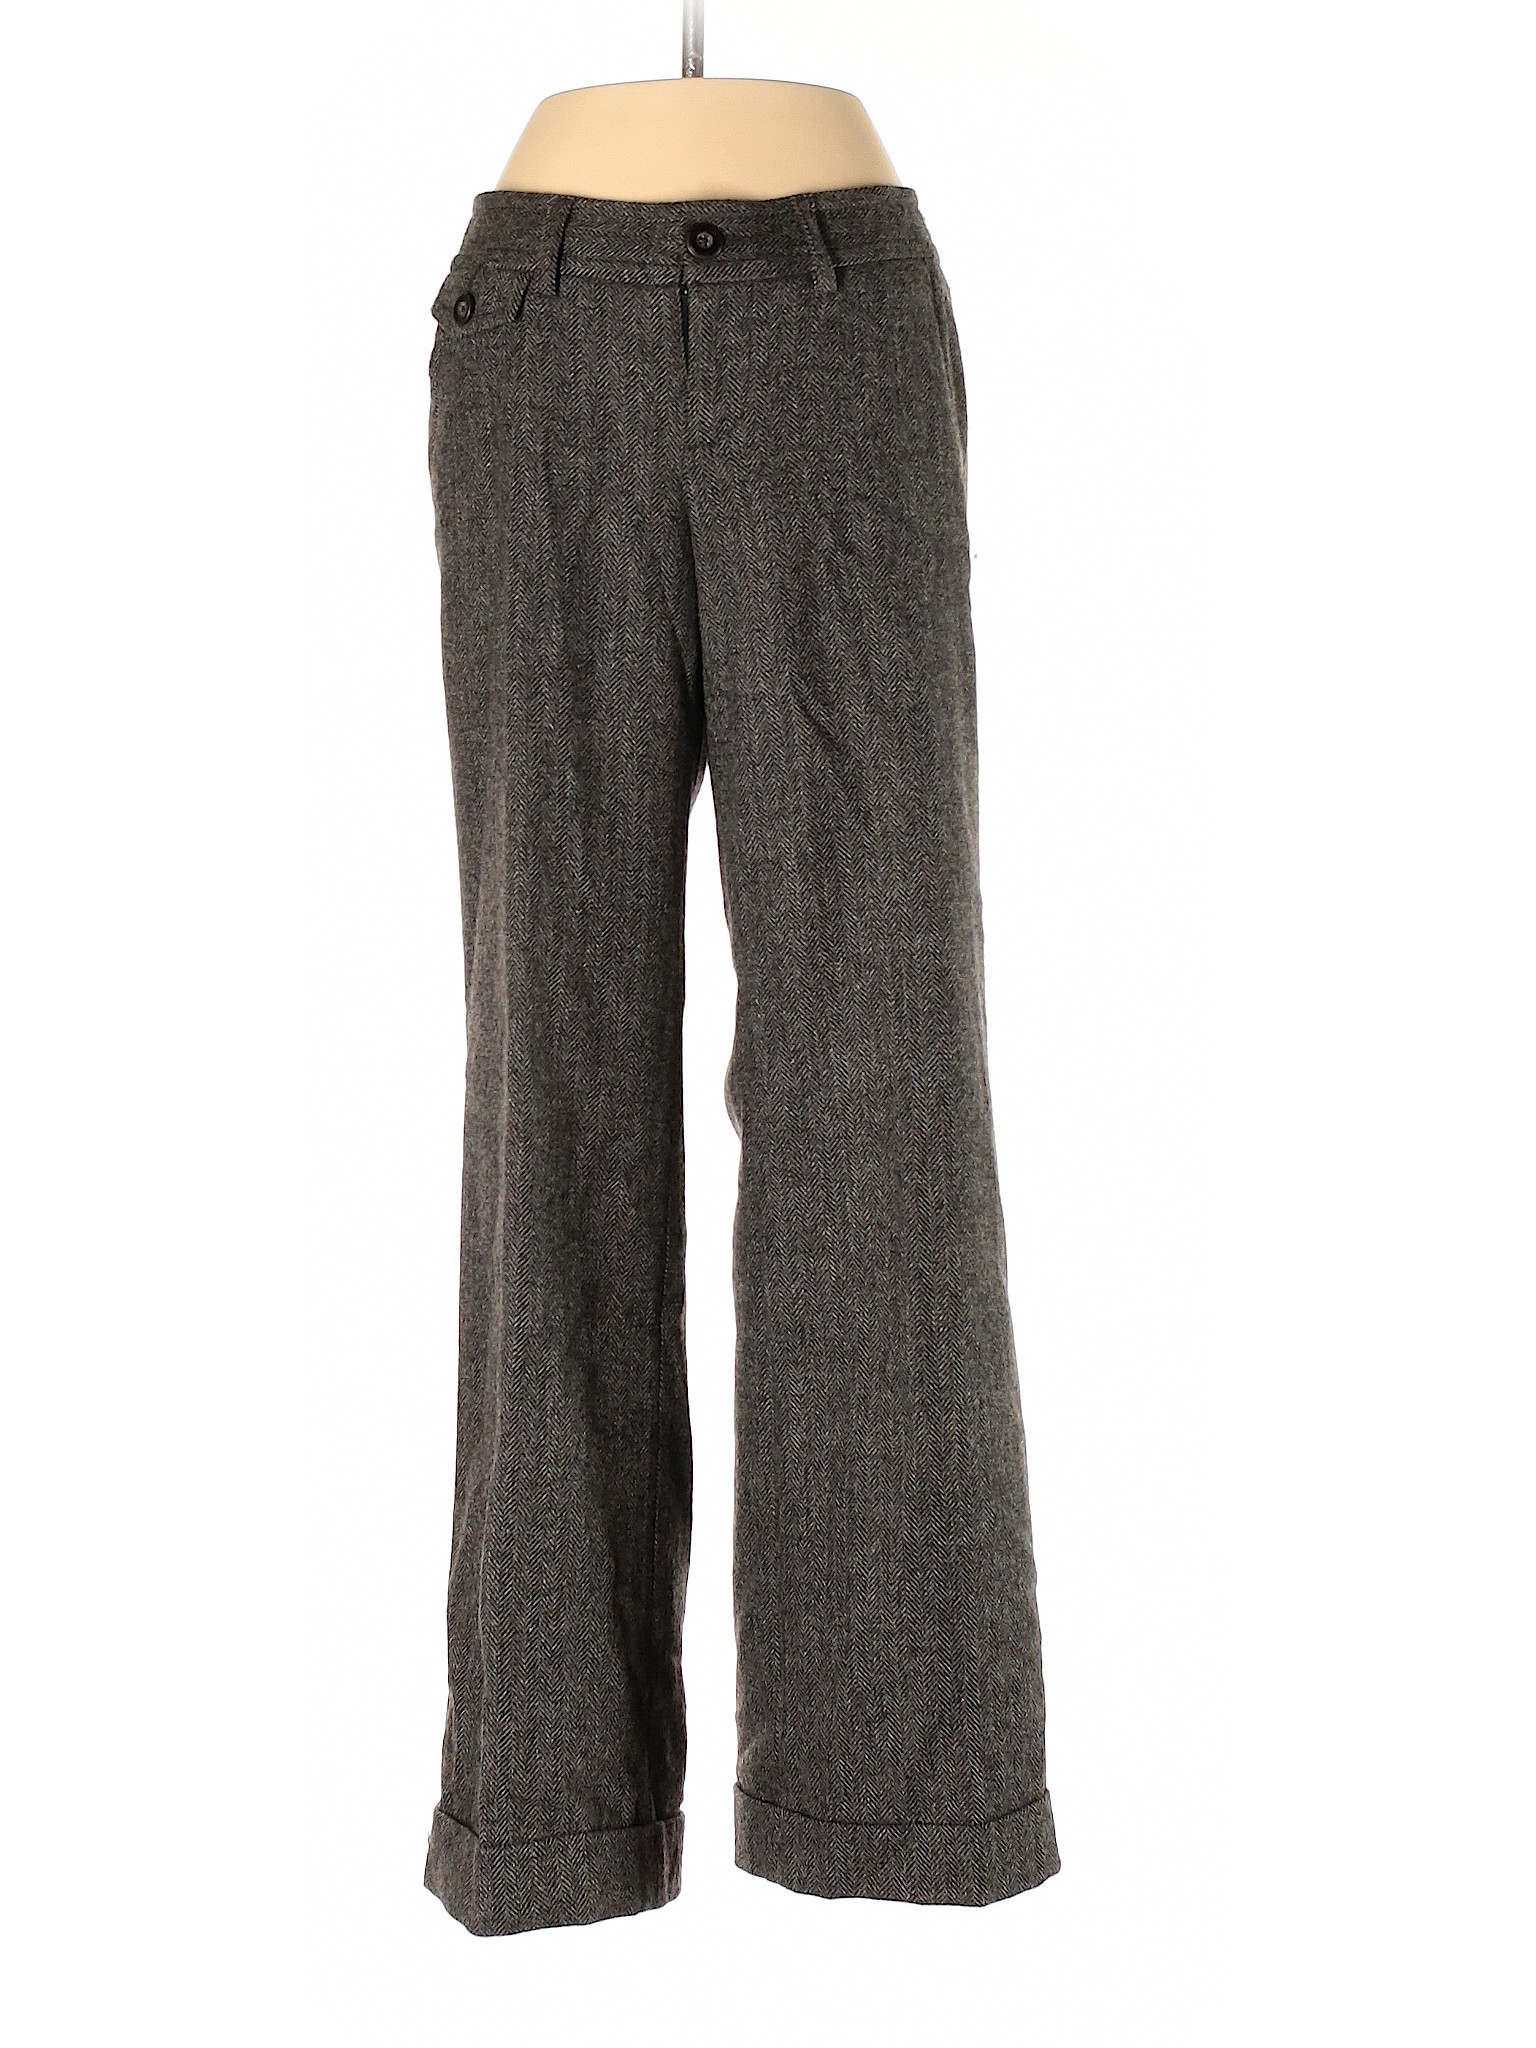 Eddie Bauer Women Gray Wool Pants 2 Petites | eBay